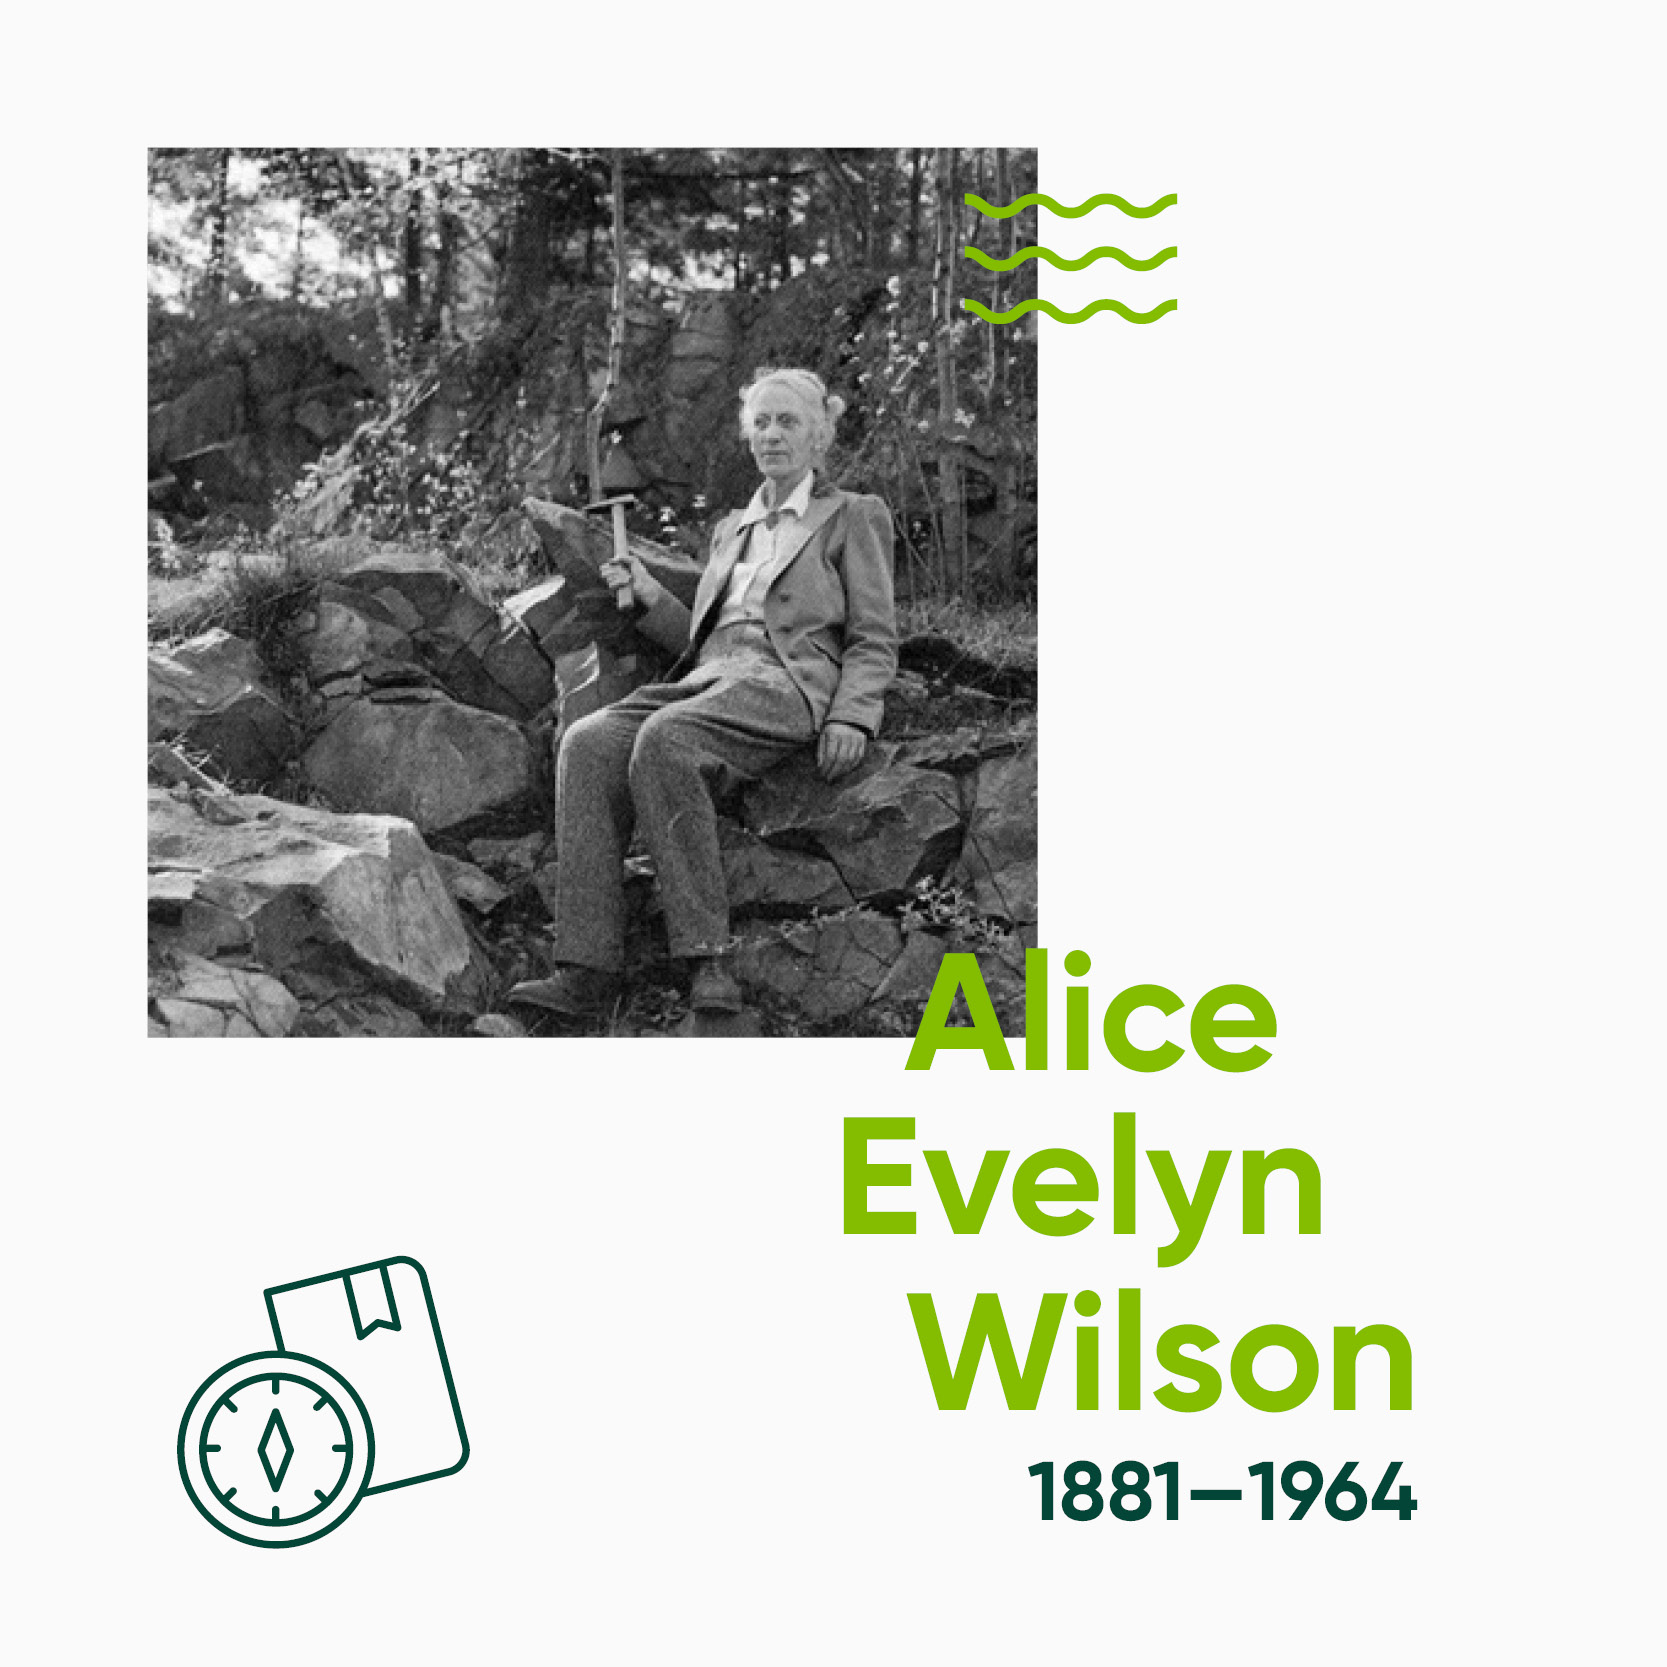 Portrait of Alice Evelyn Wilson